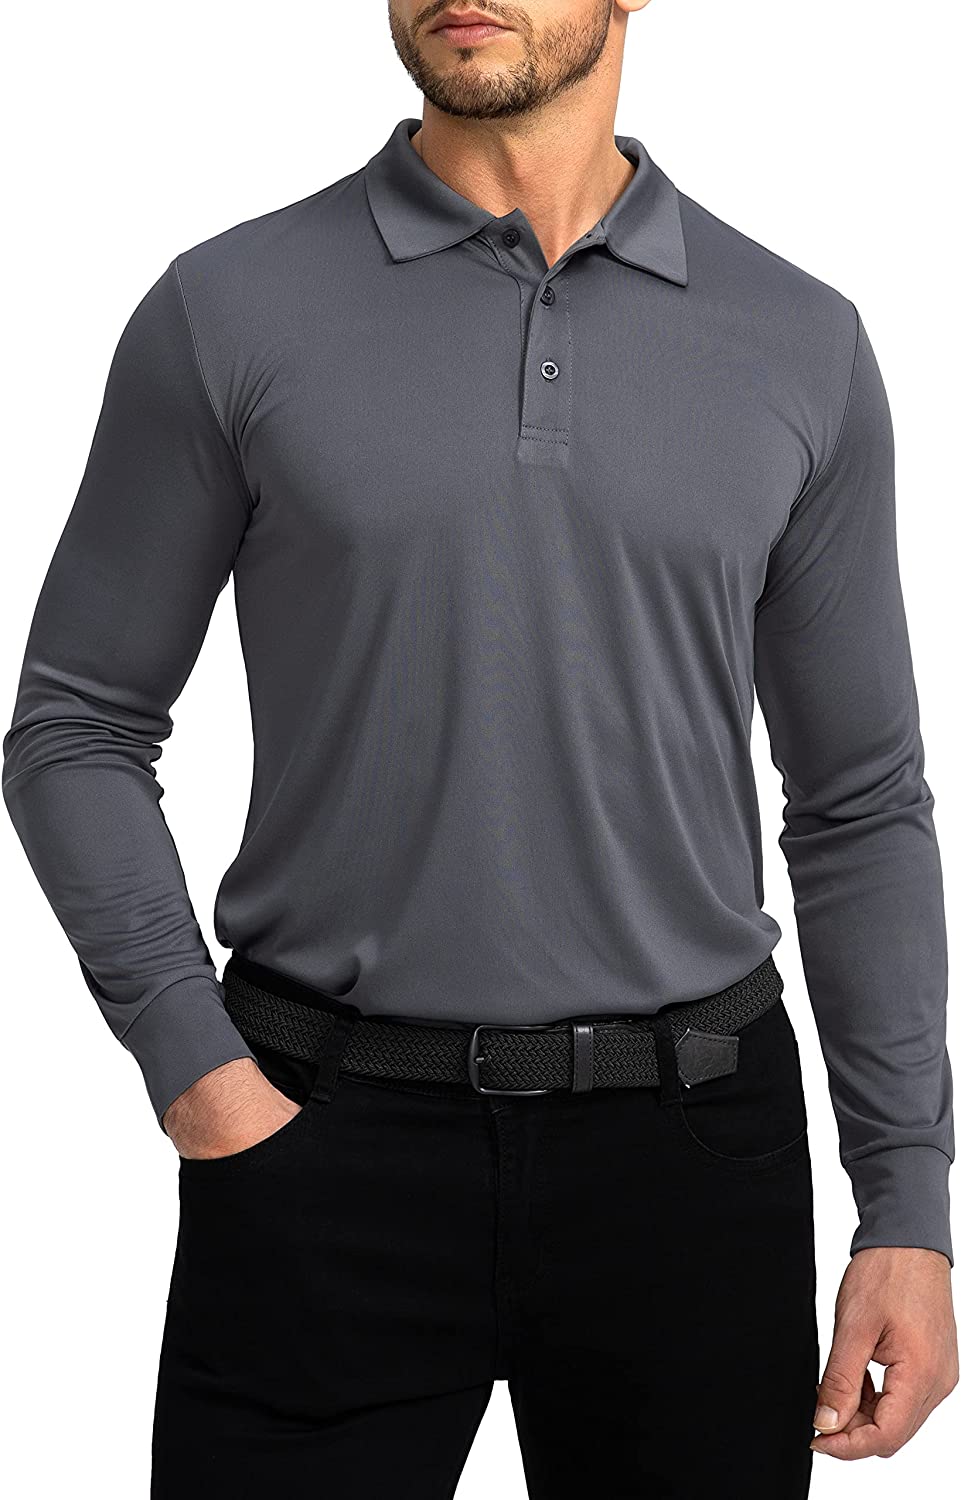 Men's Polo Shirt Long Sleeve Golf Shirts Lightweight UPF 50+ Sun Protection  Cool